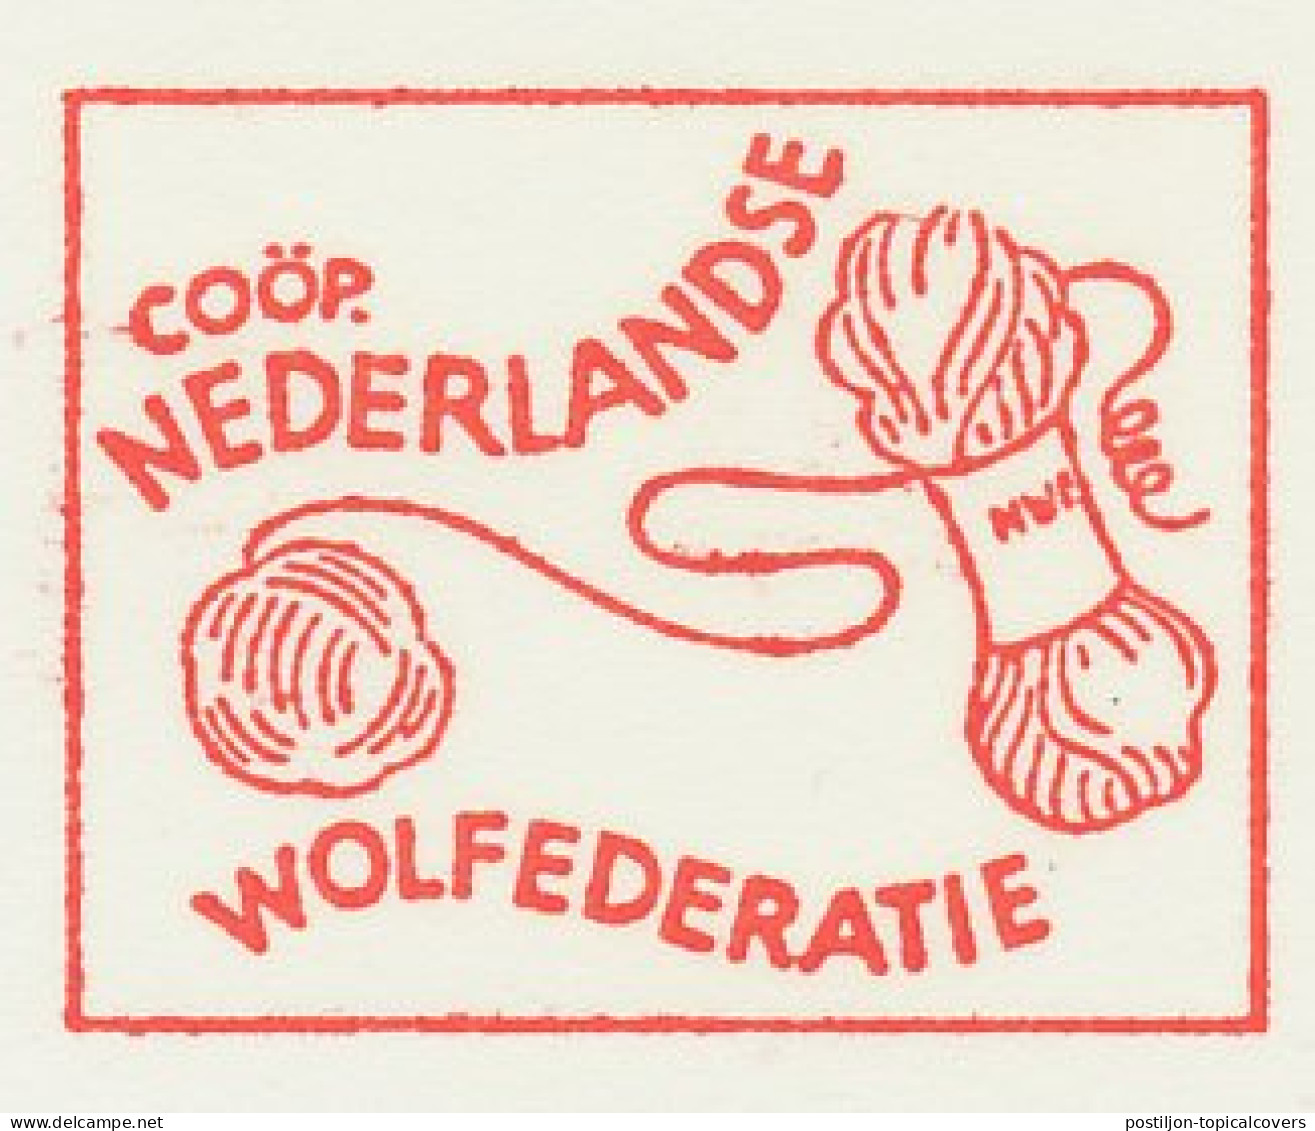 Proof / Test Meter Strip Netherlands 1968 Wool Federation - Textile